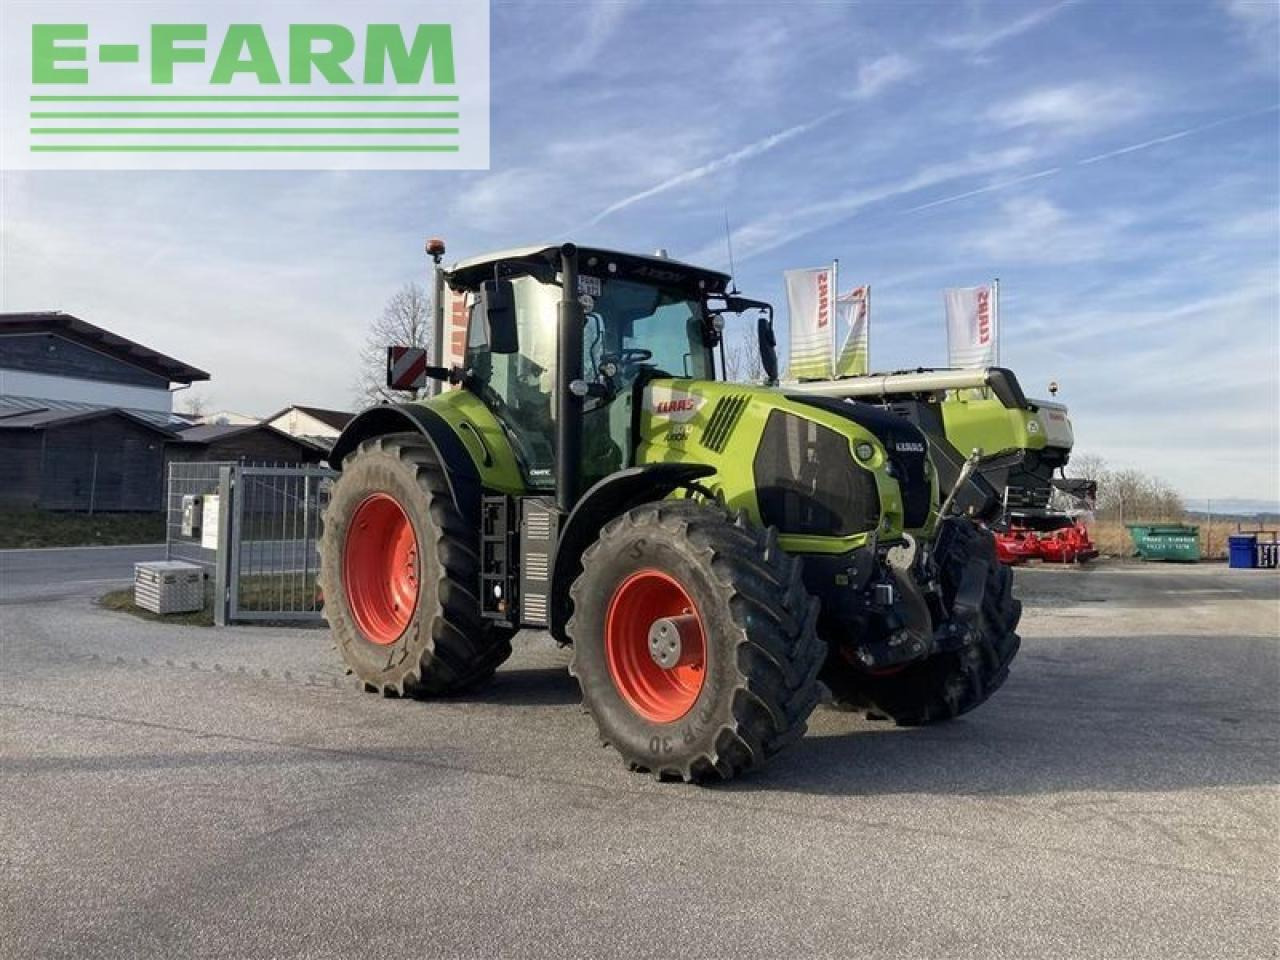 Farm tractor CLAAS axion 870 cmatic - stage v